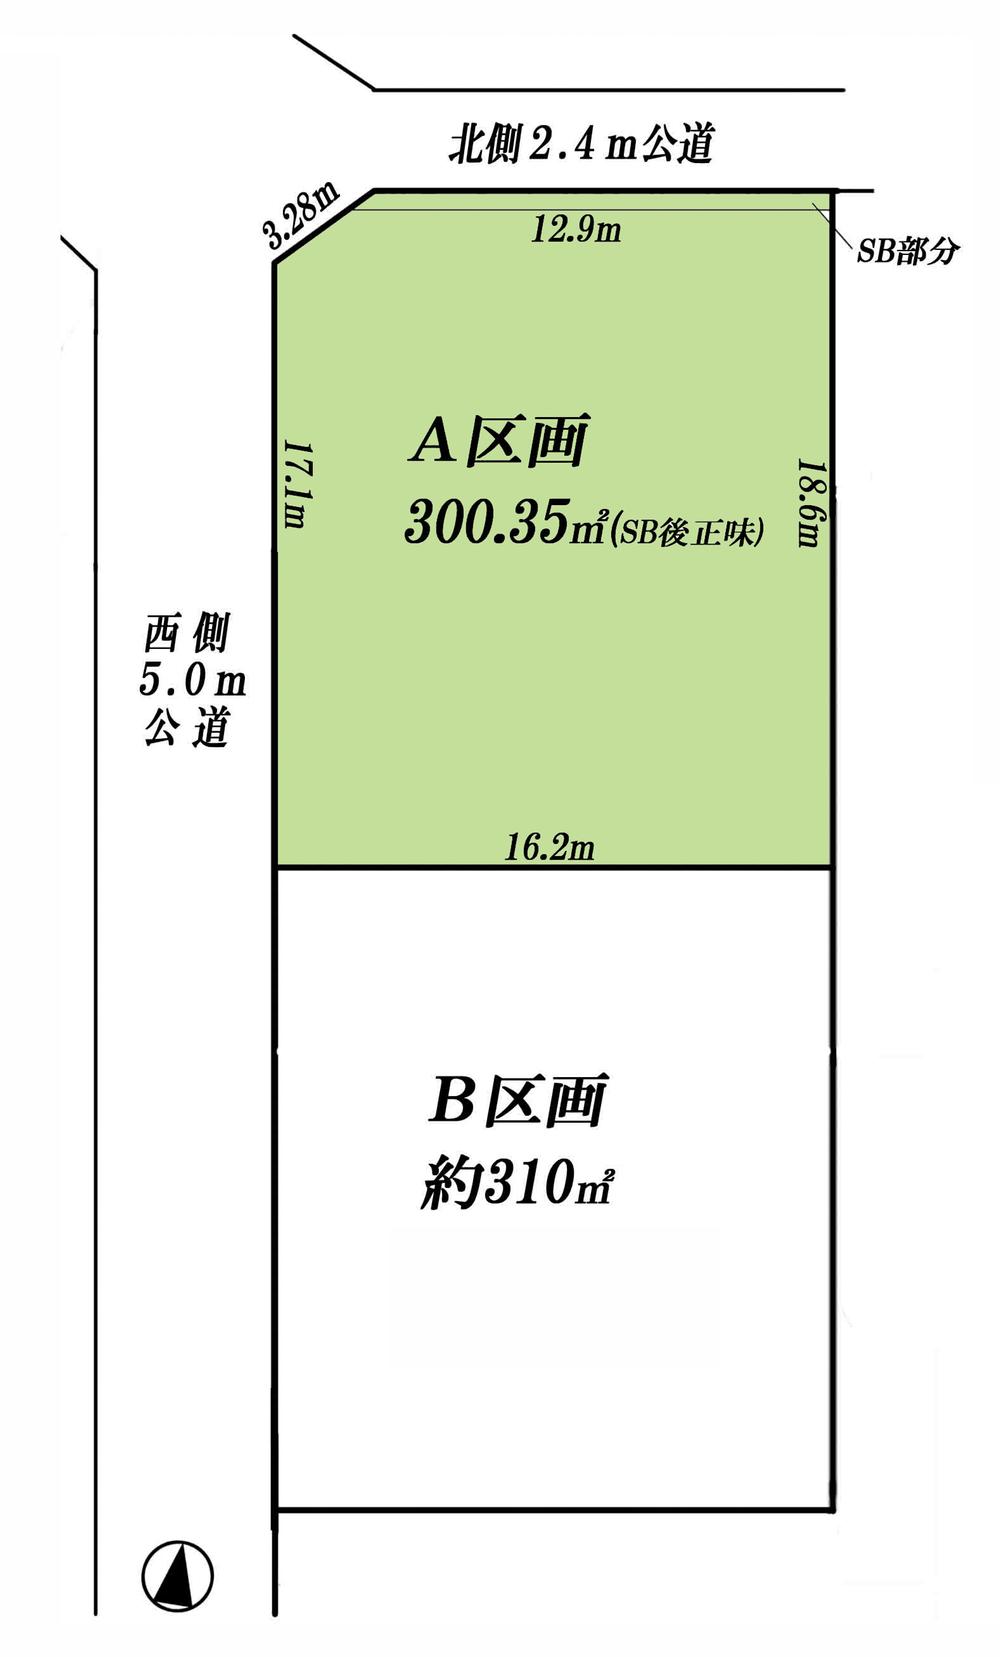 Compartment figure. Land price 8.5 million yen, Land area 300.35 sq m